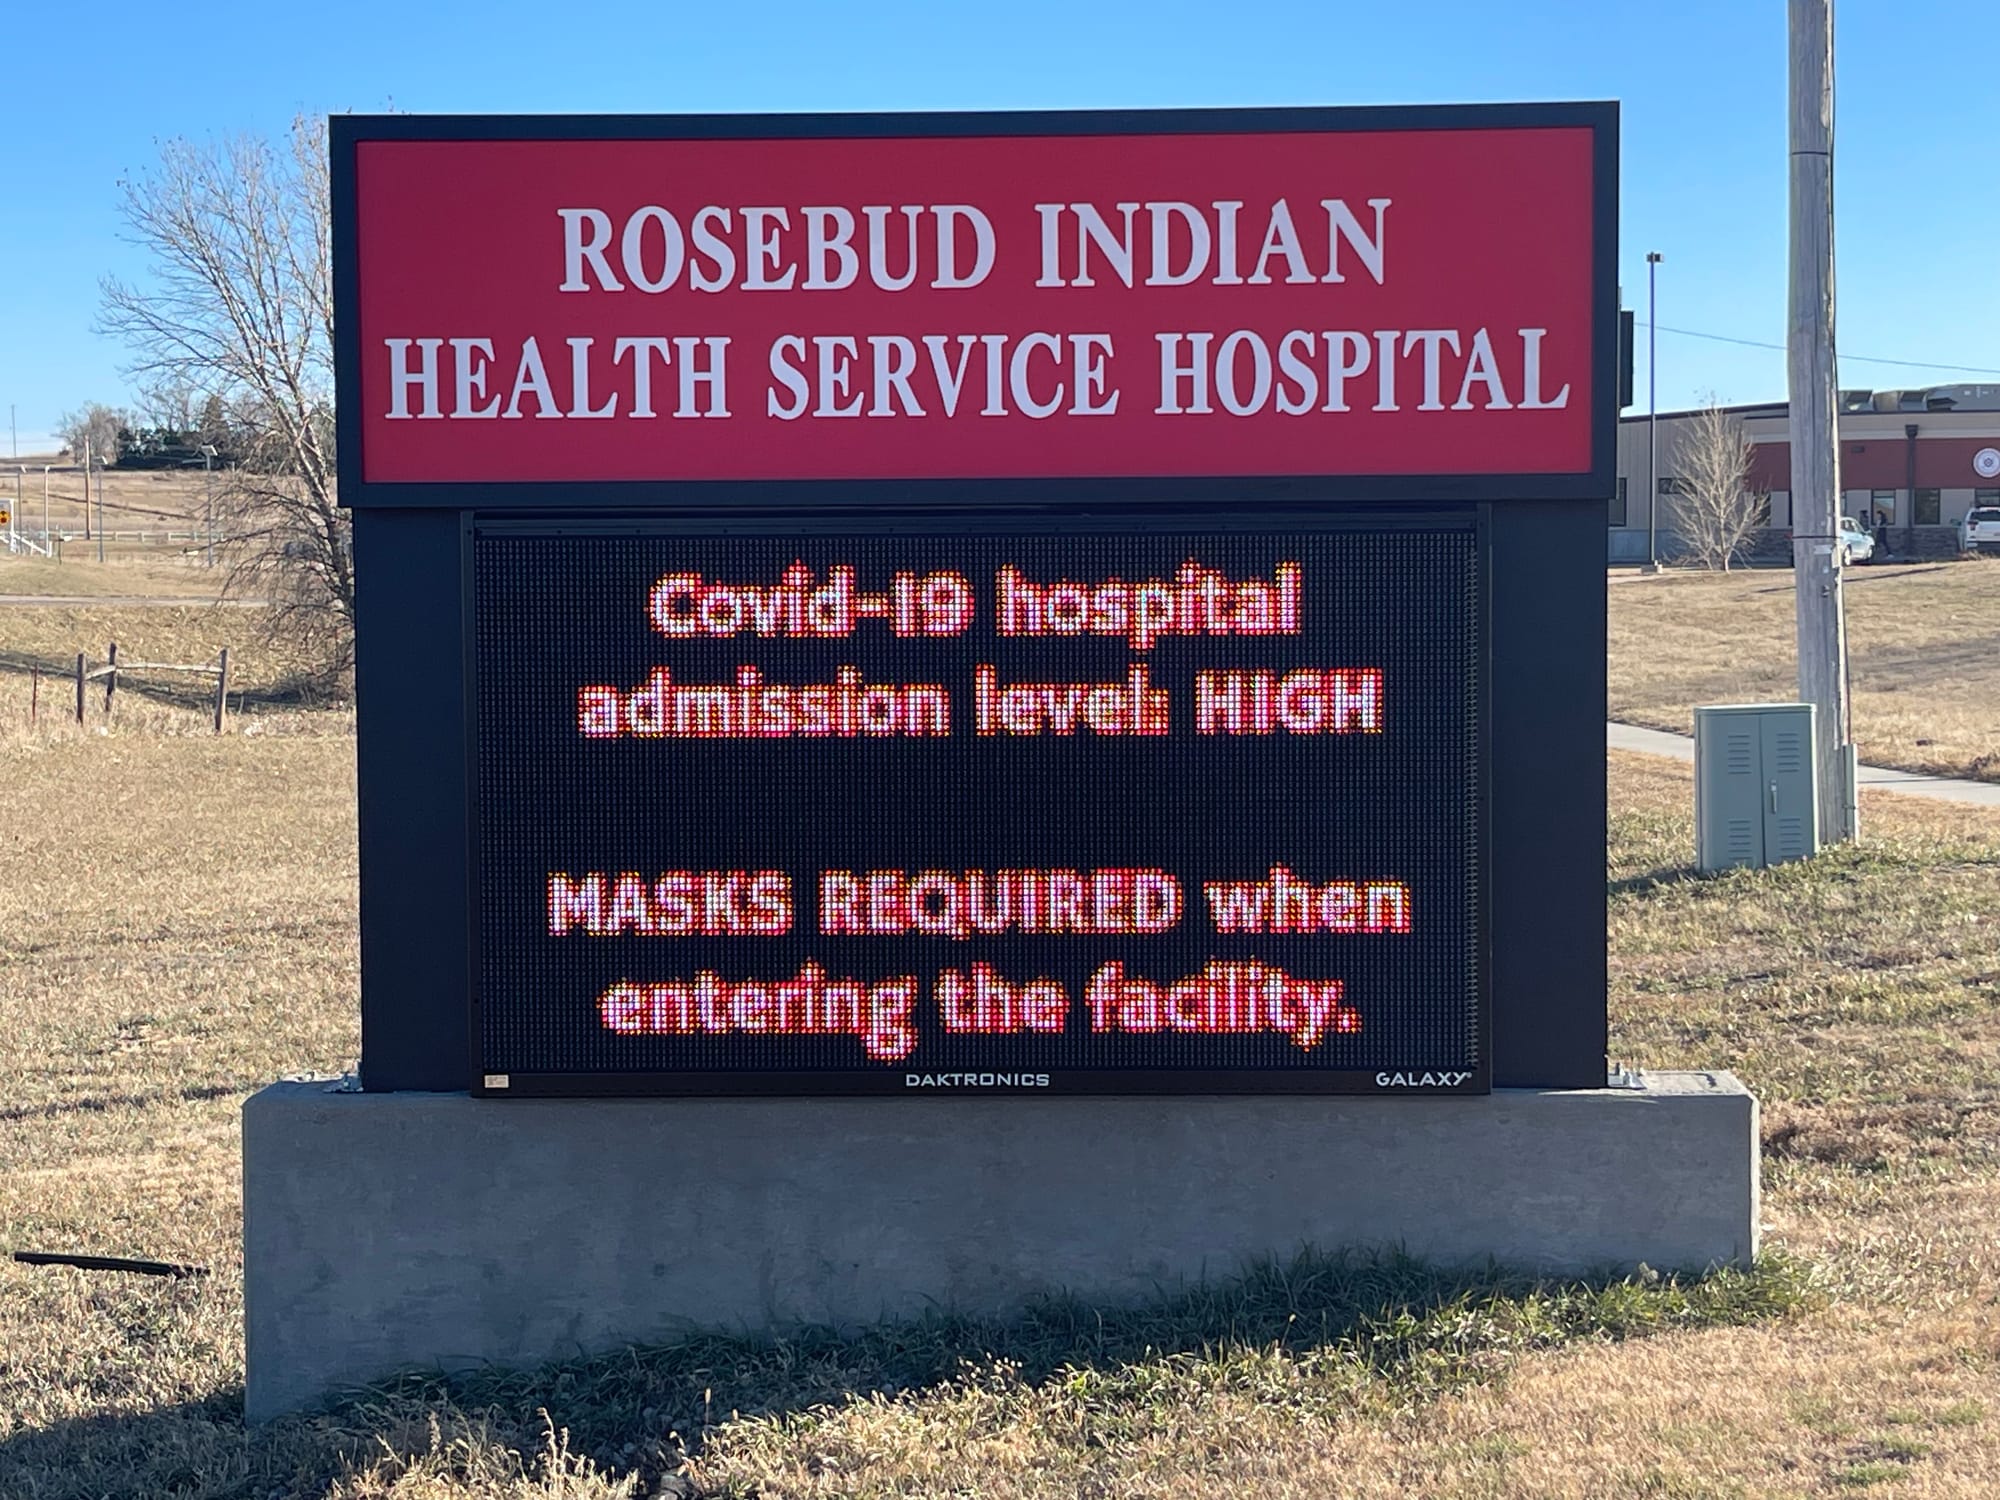 A sign outside the Rosebud Indian Health Service Hospital in Rosebud, South Dakota.